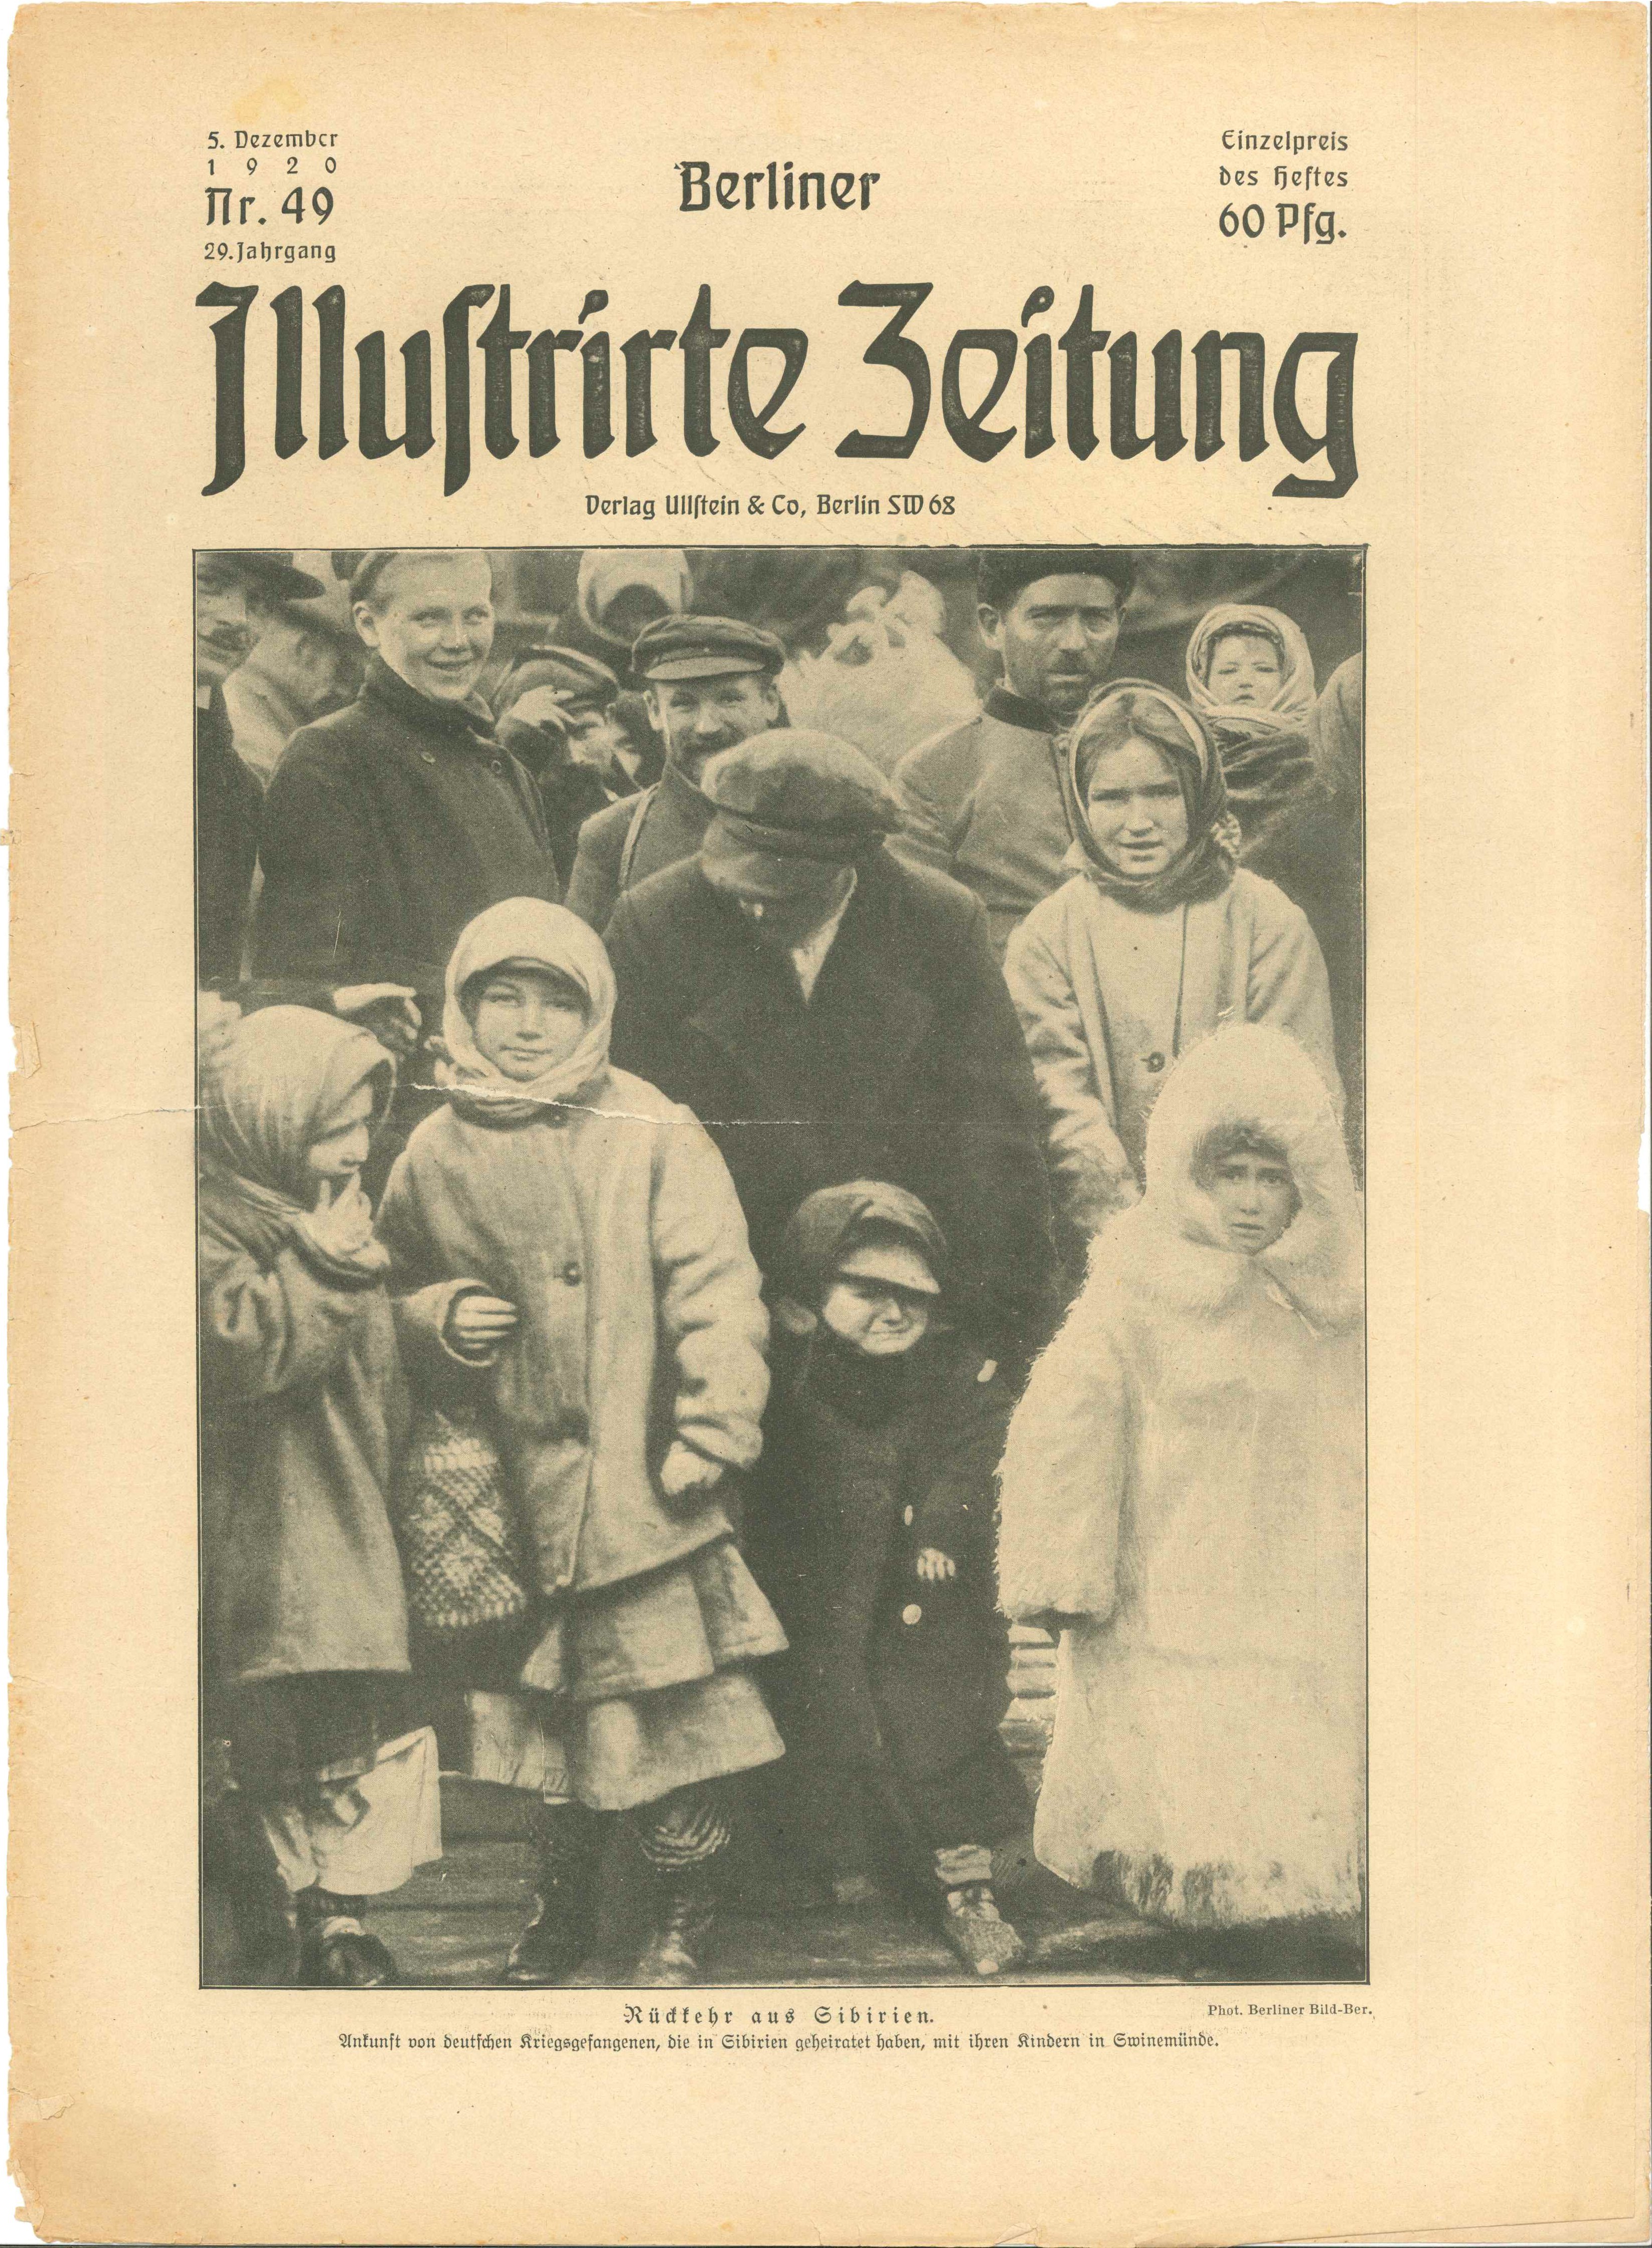 BIZ, Nr. 49, 1920, Titelseite (Kurt Tucholsky Literaturmuseum CC BY-NC-SA)